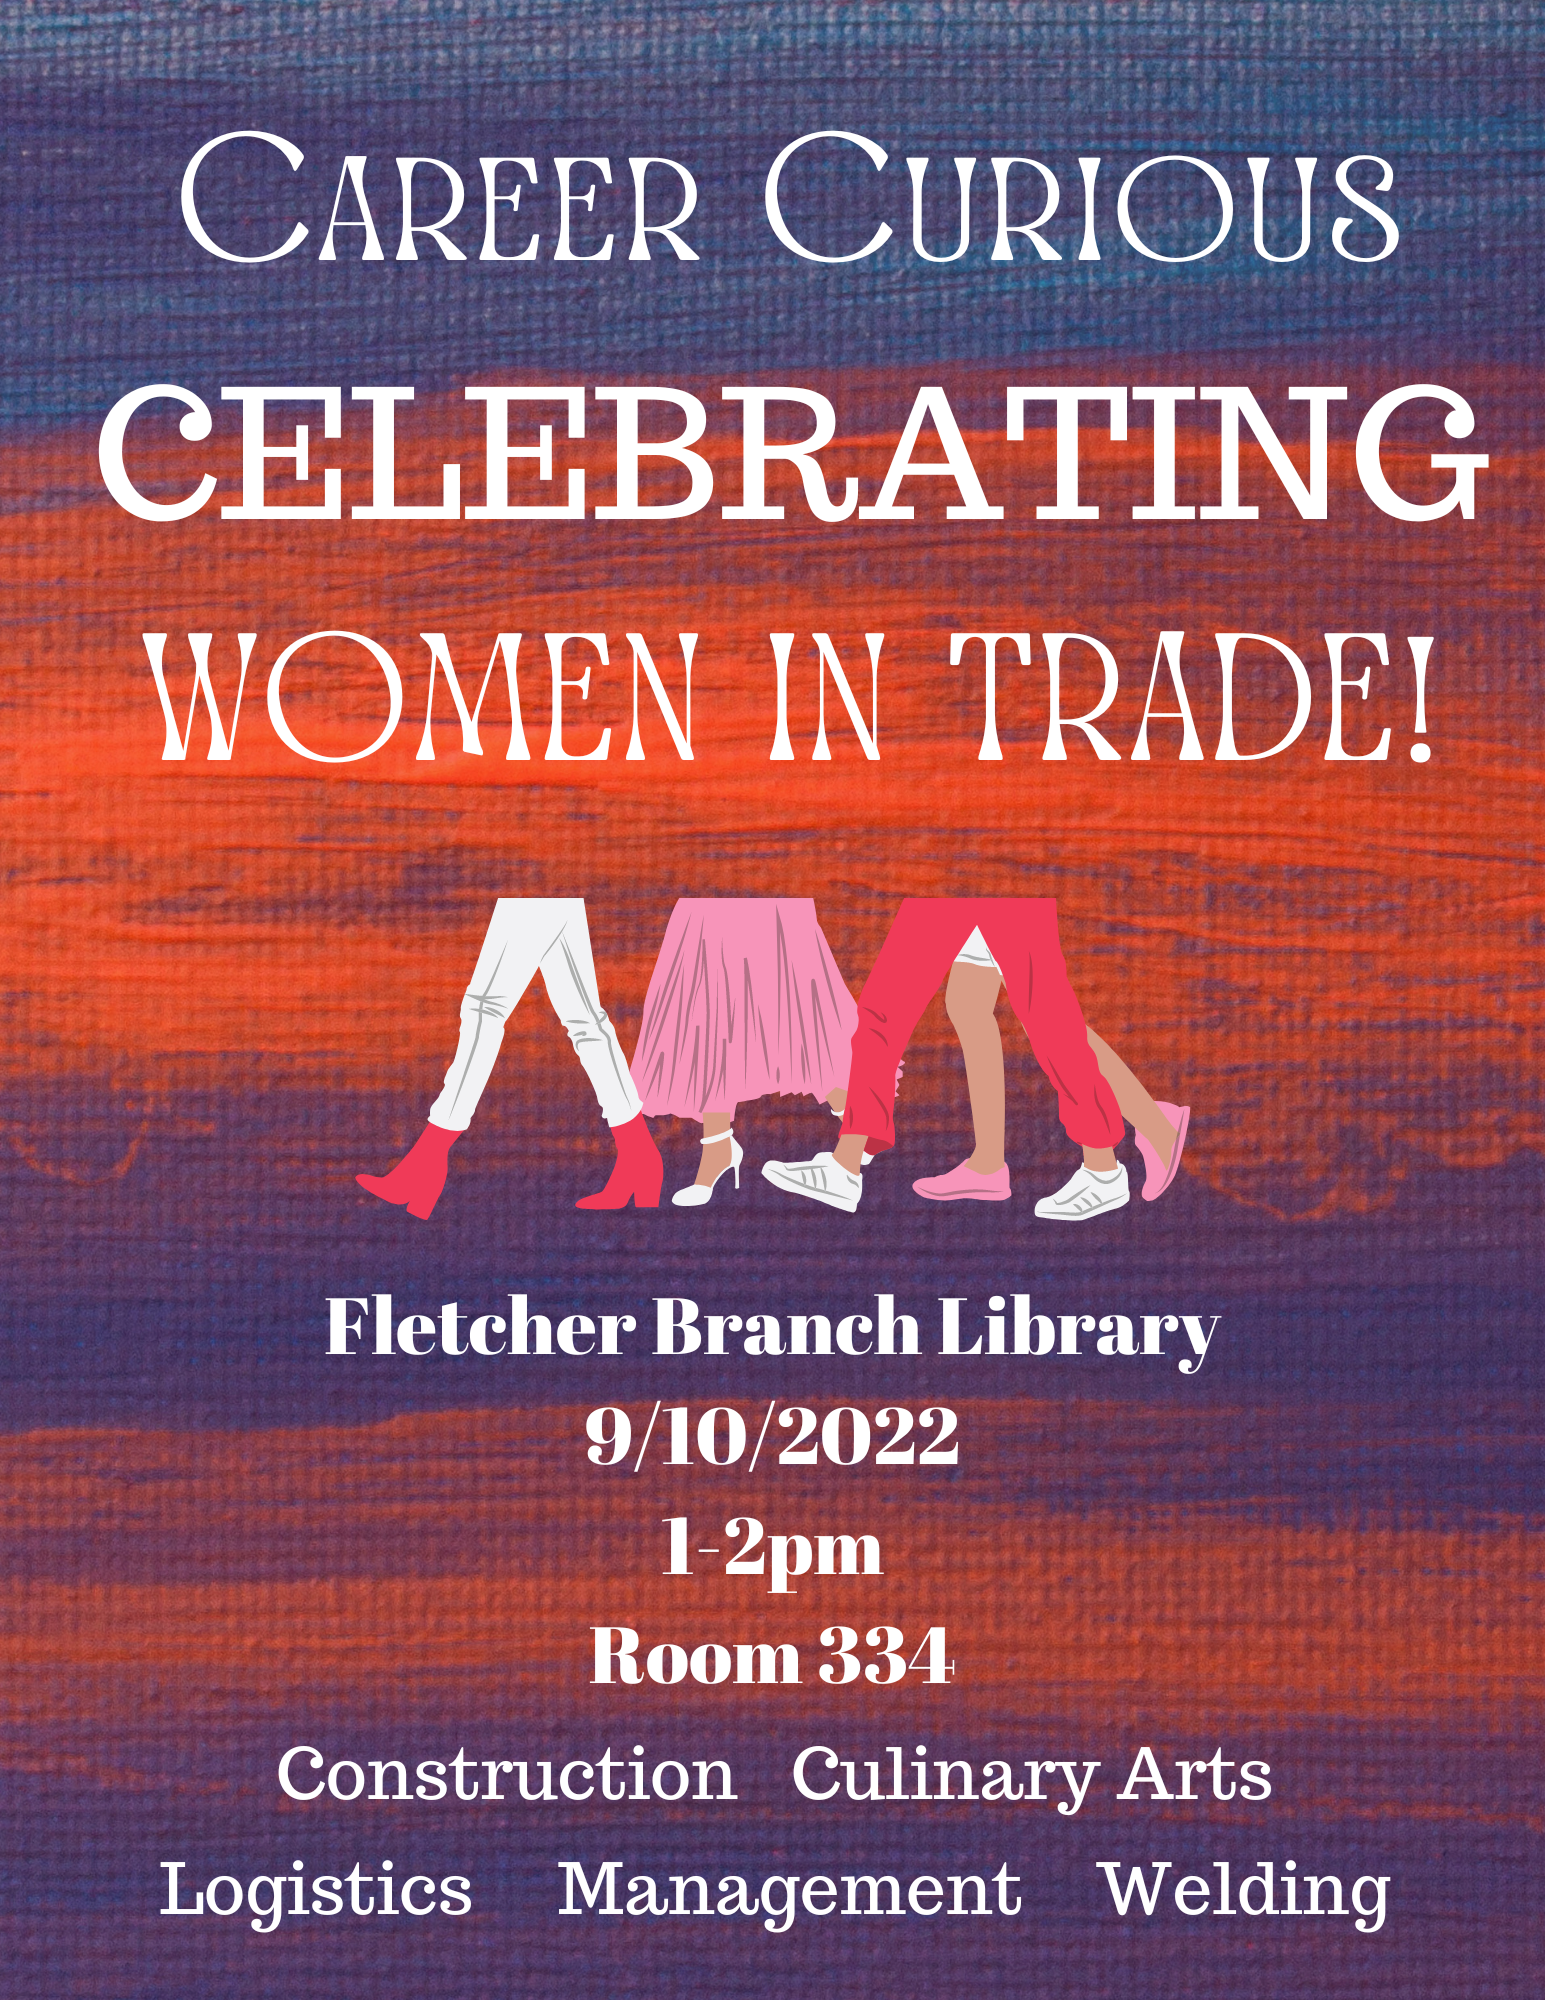 CAREER CURIOUS - Celebrating Women in Trade! 